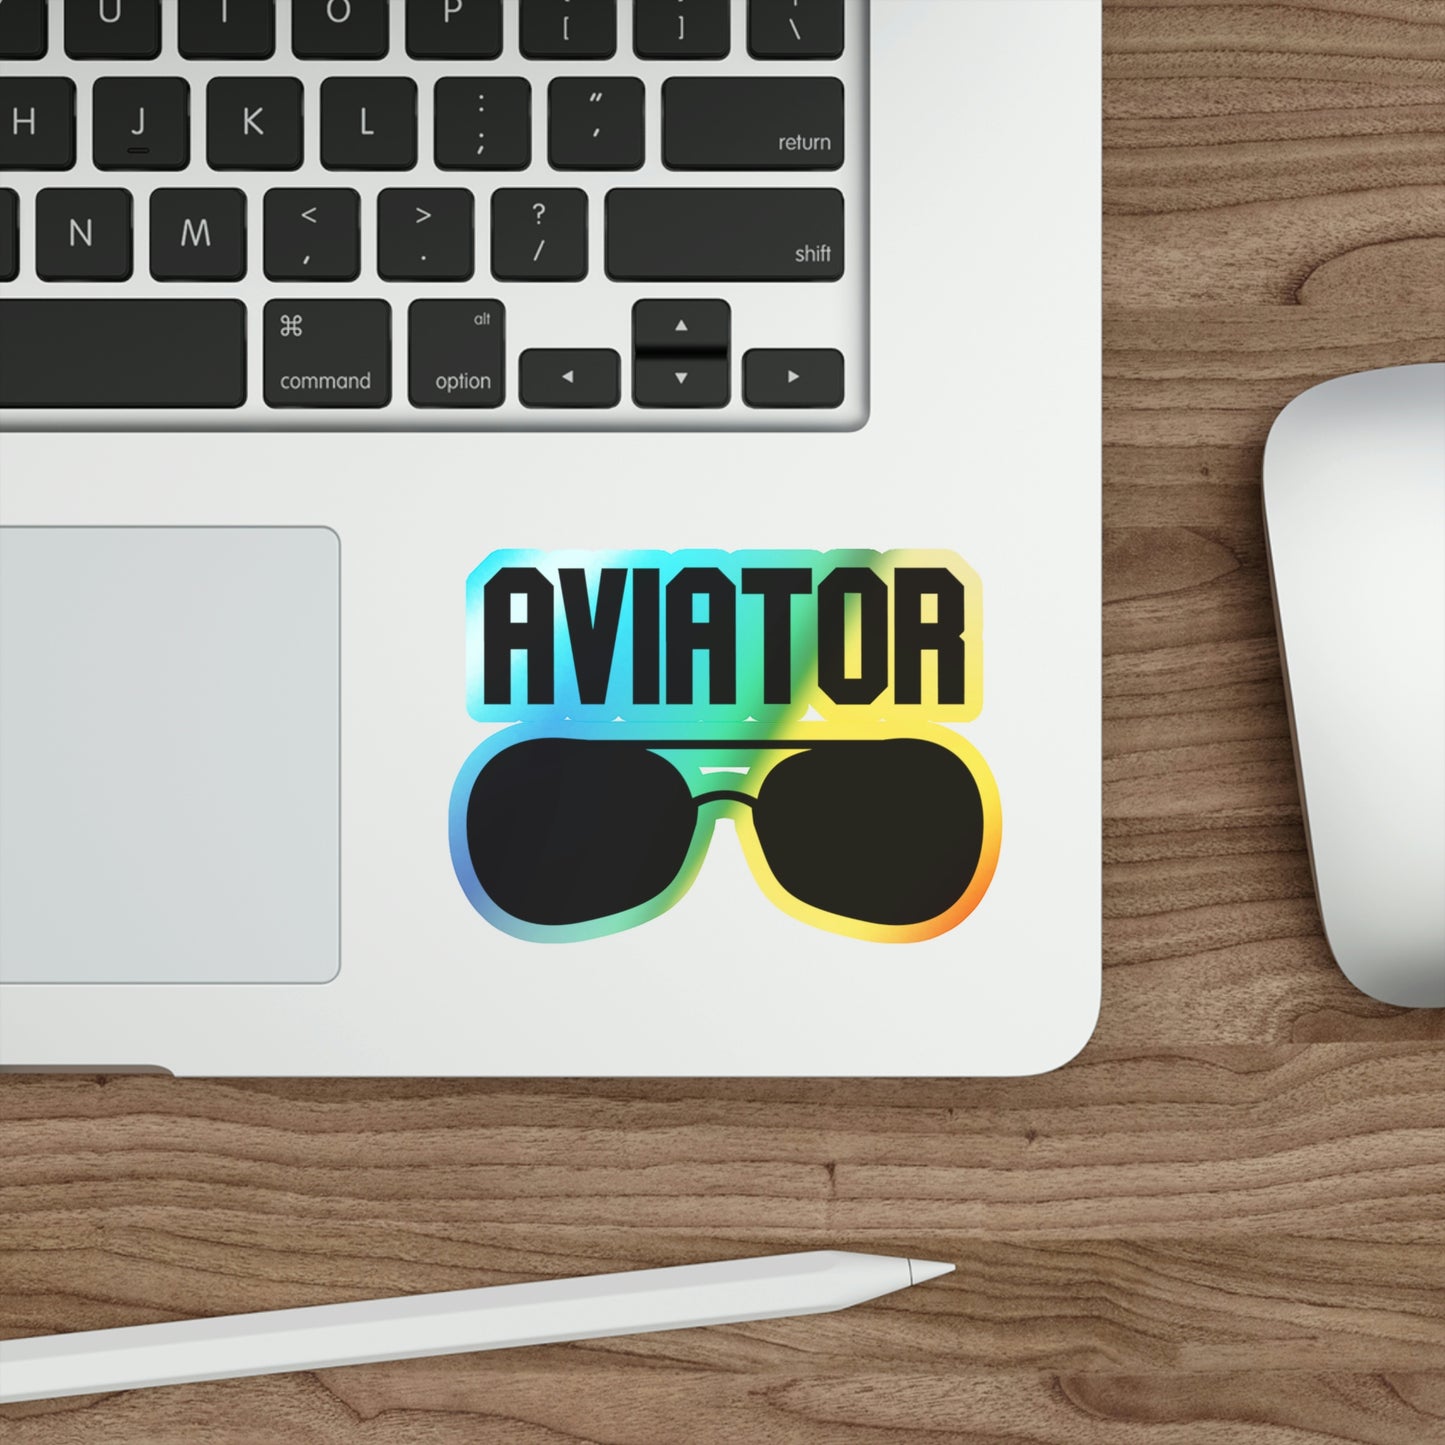 Aviator Sunglasses Holographic Die-cut Stickers